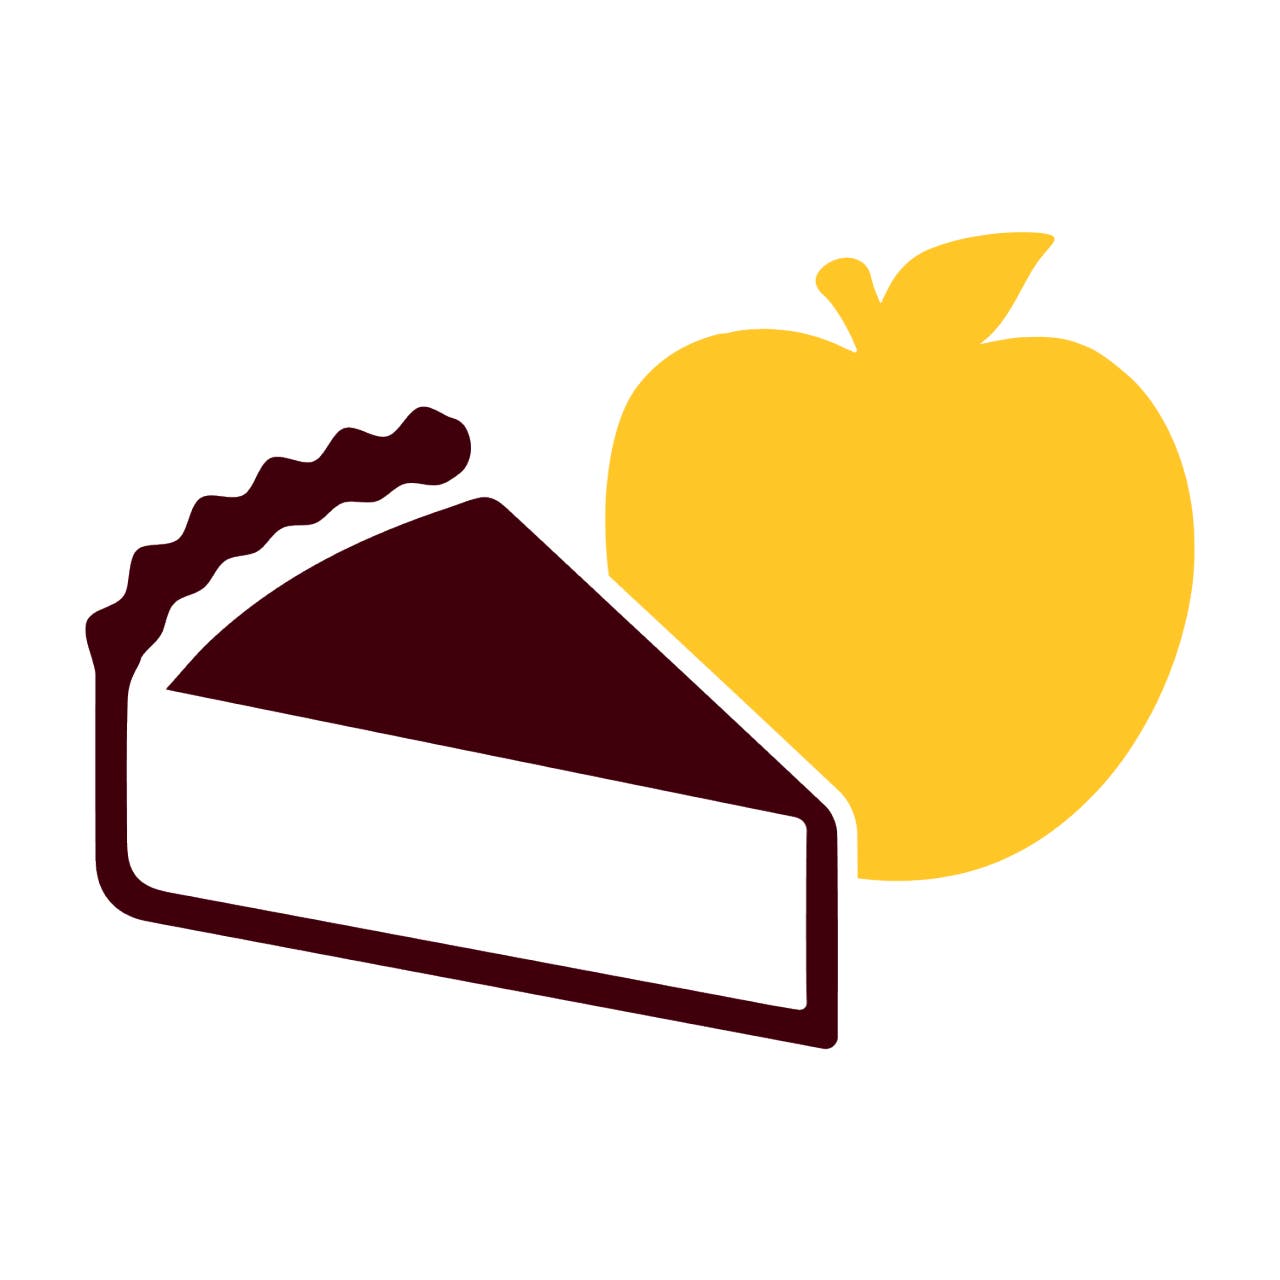 pie and apple illustration